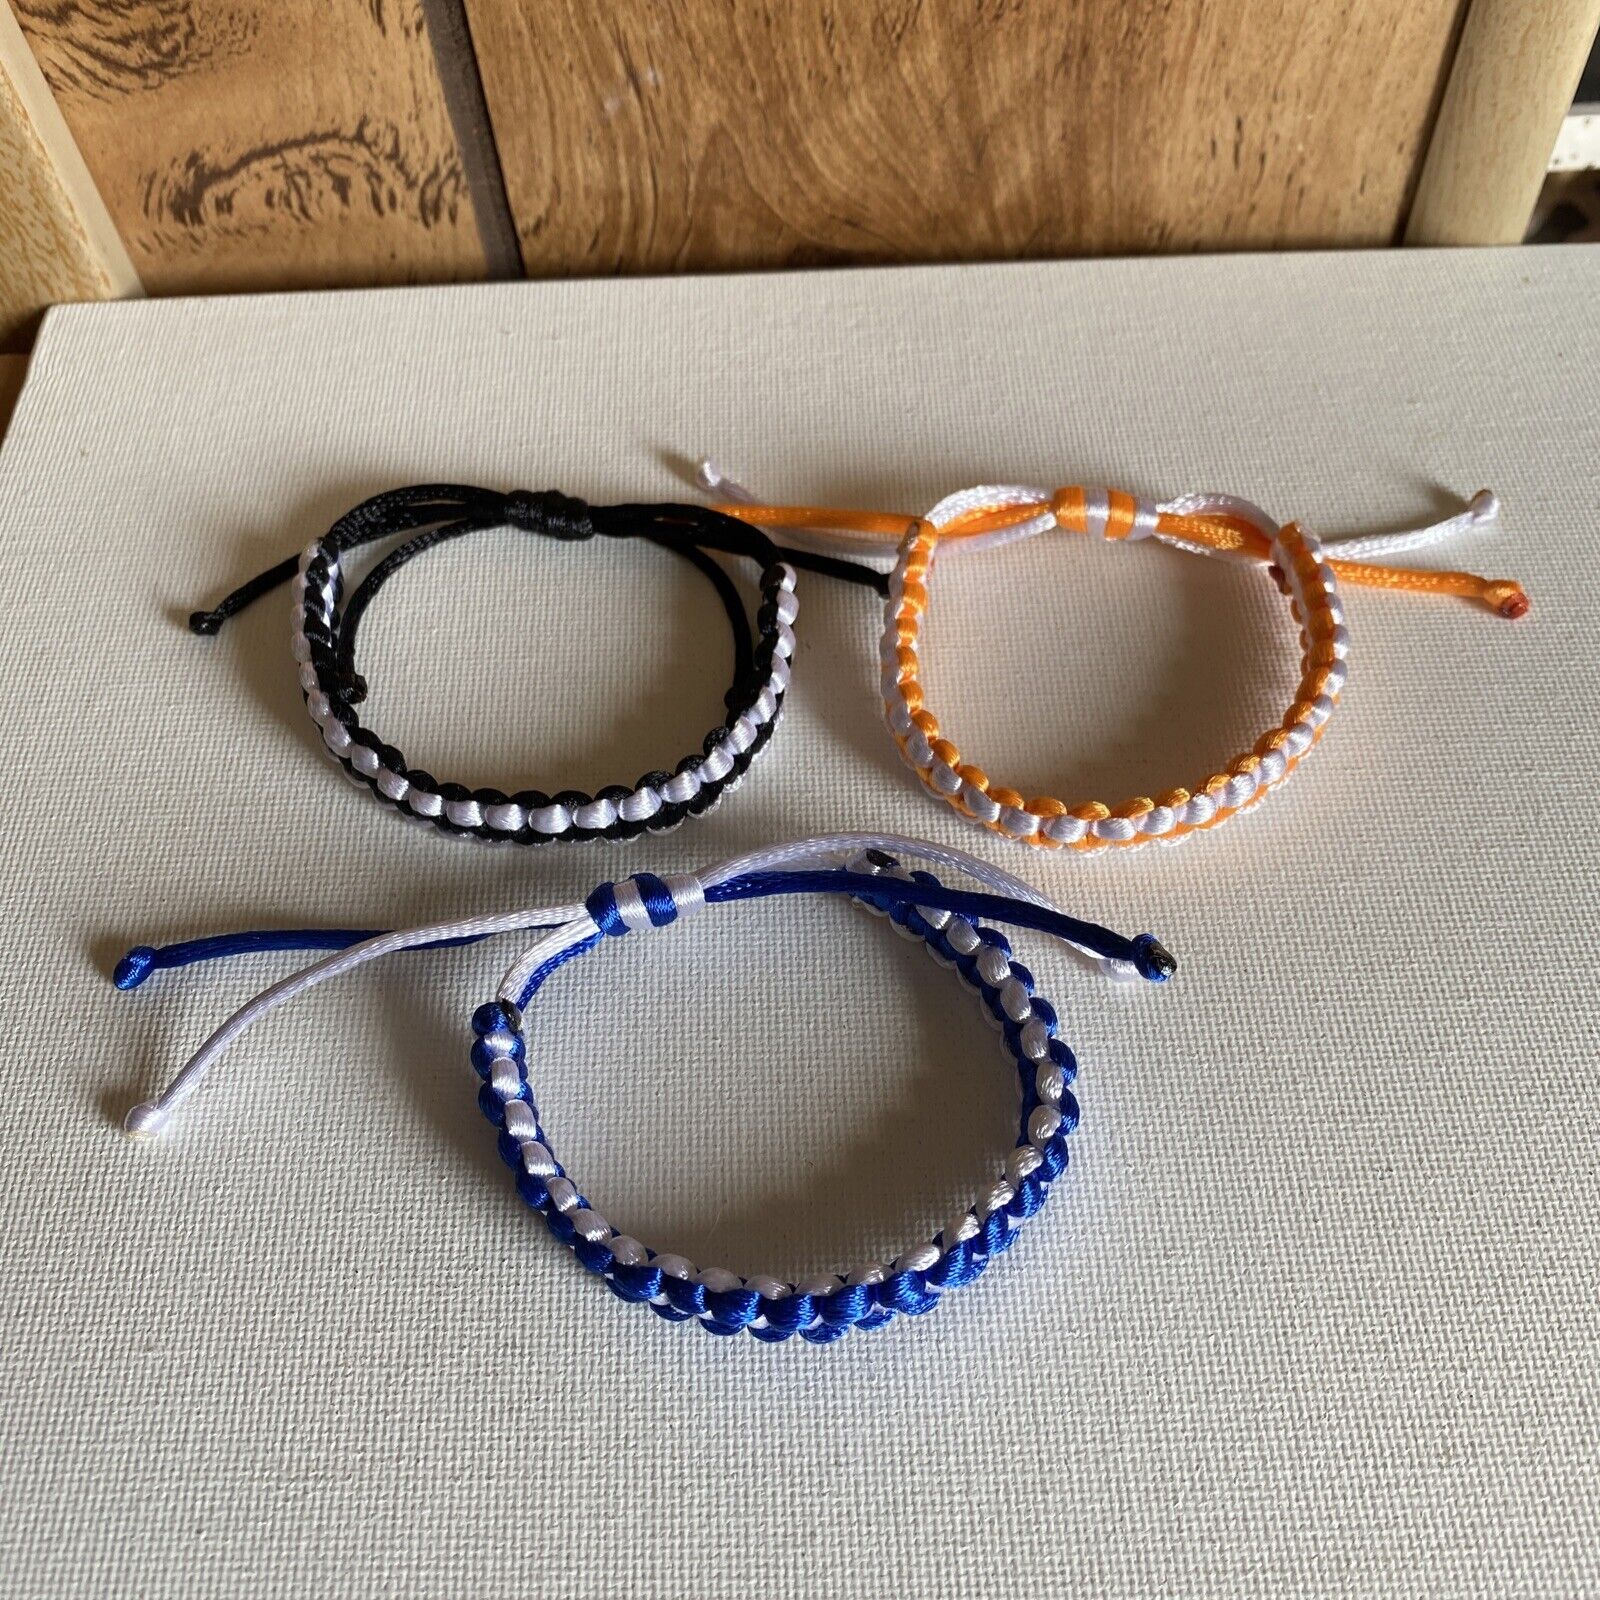 Lot of 3 Handcrafted Bracelets - Pulseras hechas Artesanalmente 3 Pack